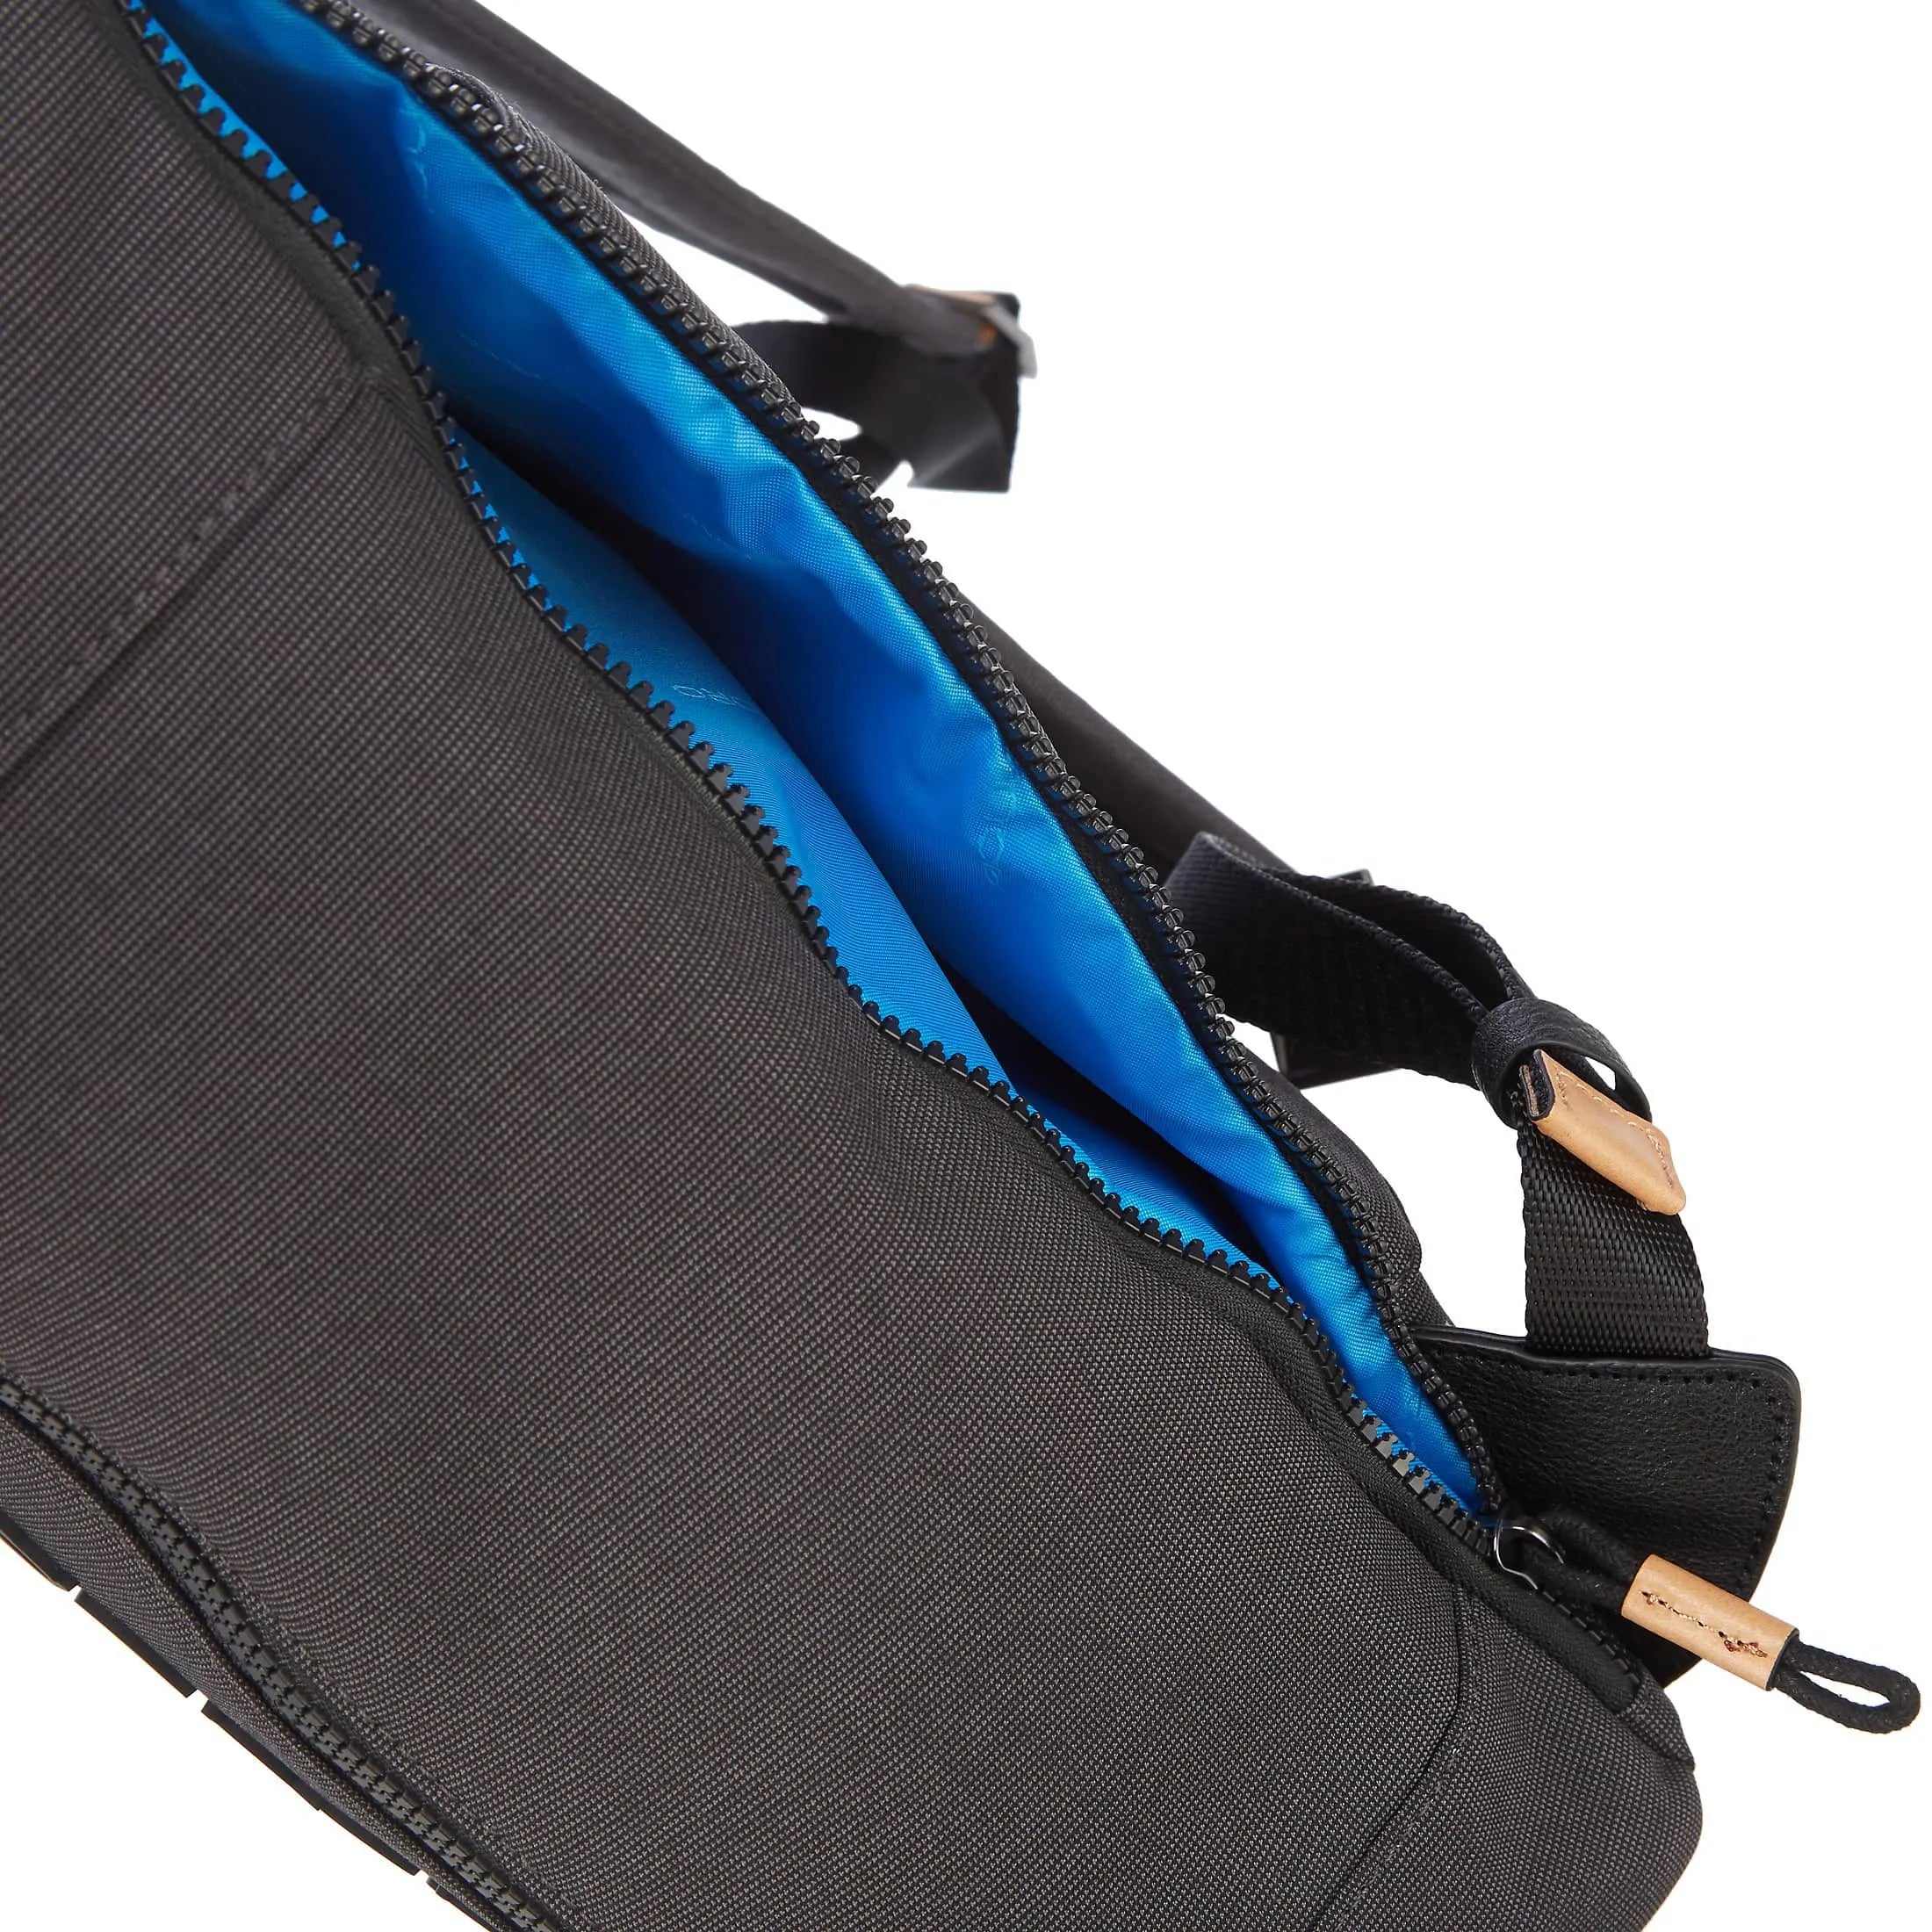 Piquadro Blade Roll Top Laptop Backpack 45 cm - Black